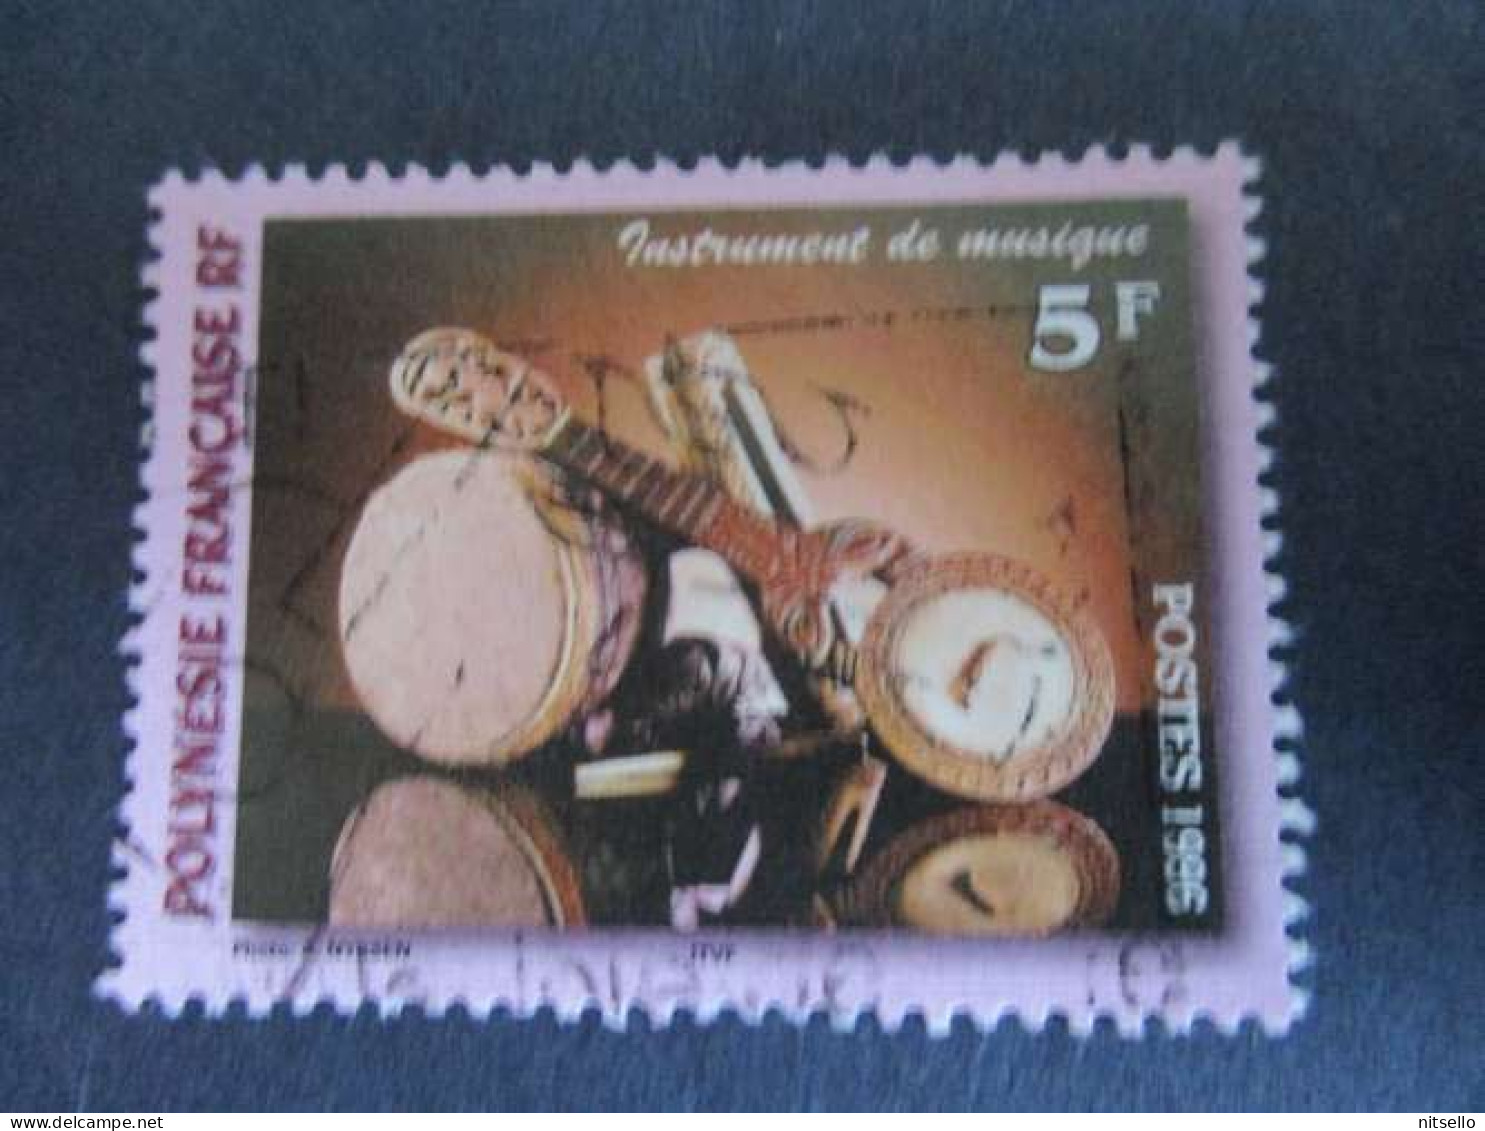 LOTE 2202B ///  (C020)  POLINESIA FRANCESA  - YVERT Nº: 513 OBL 1996  ¡¡¡ OFERTA - LIQUIDATION - JE LIQUIDE !!! - Used Stamps